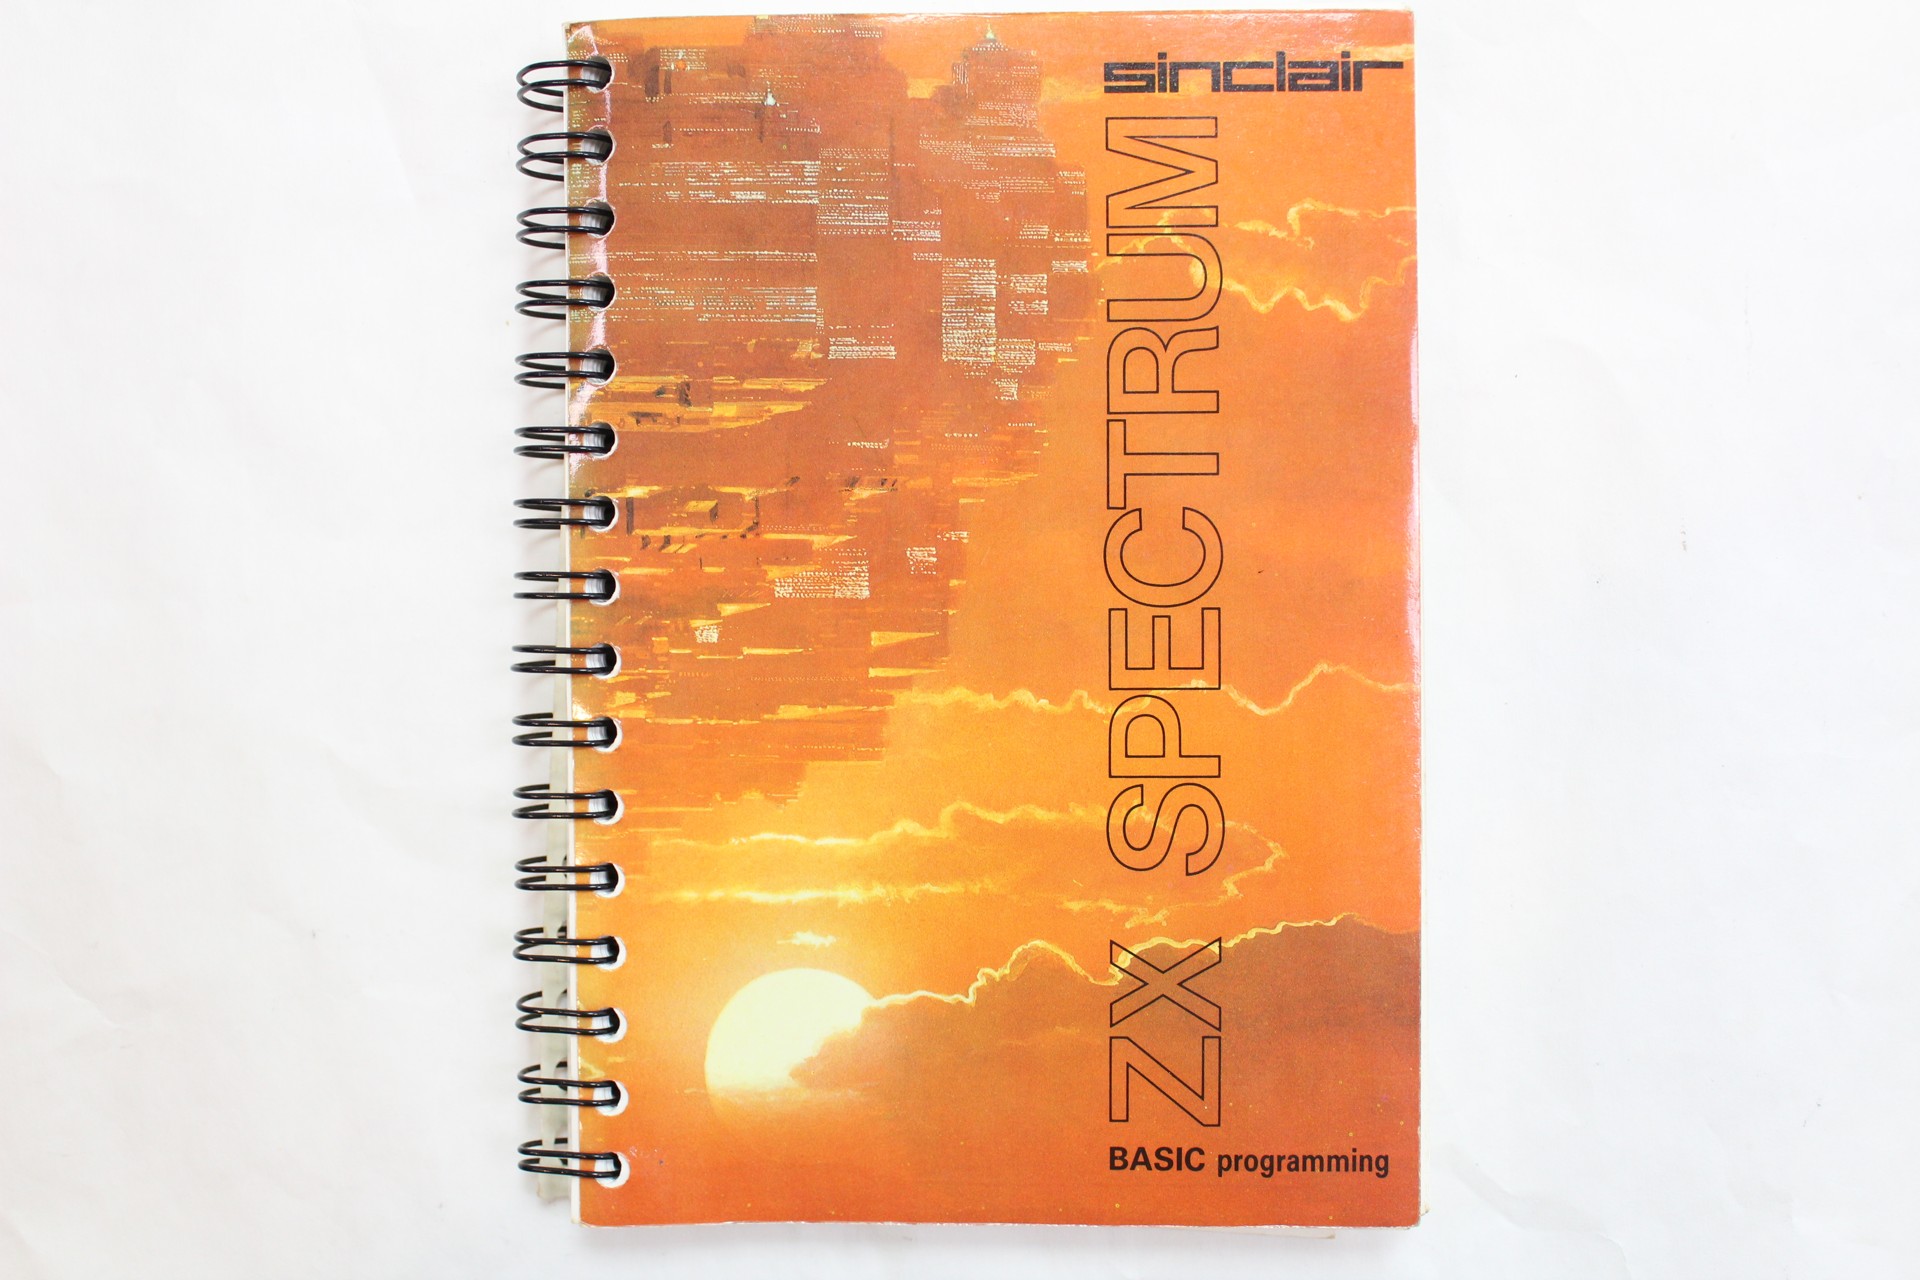 Sinclair 128K ZX Spectrum +2